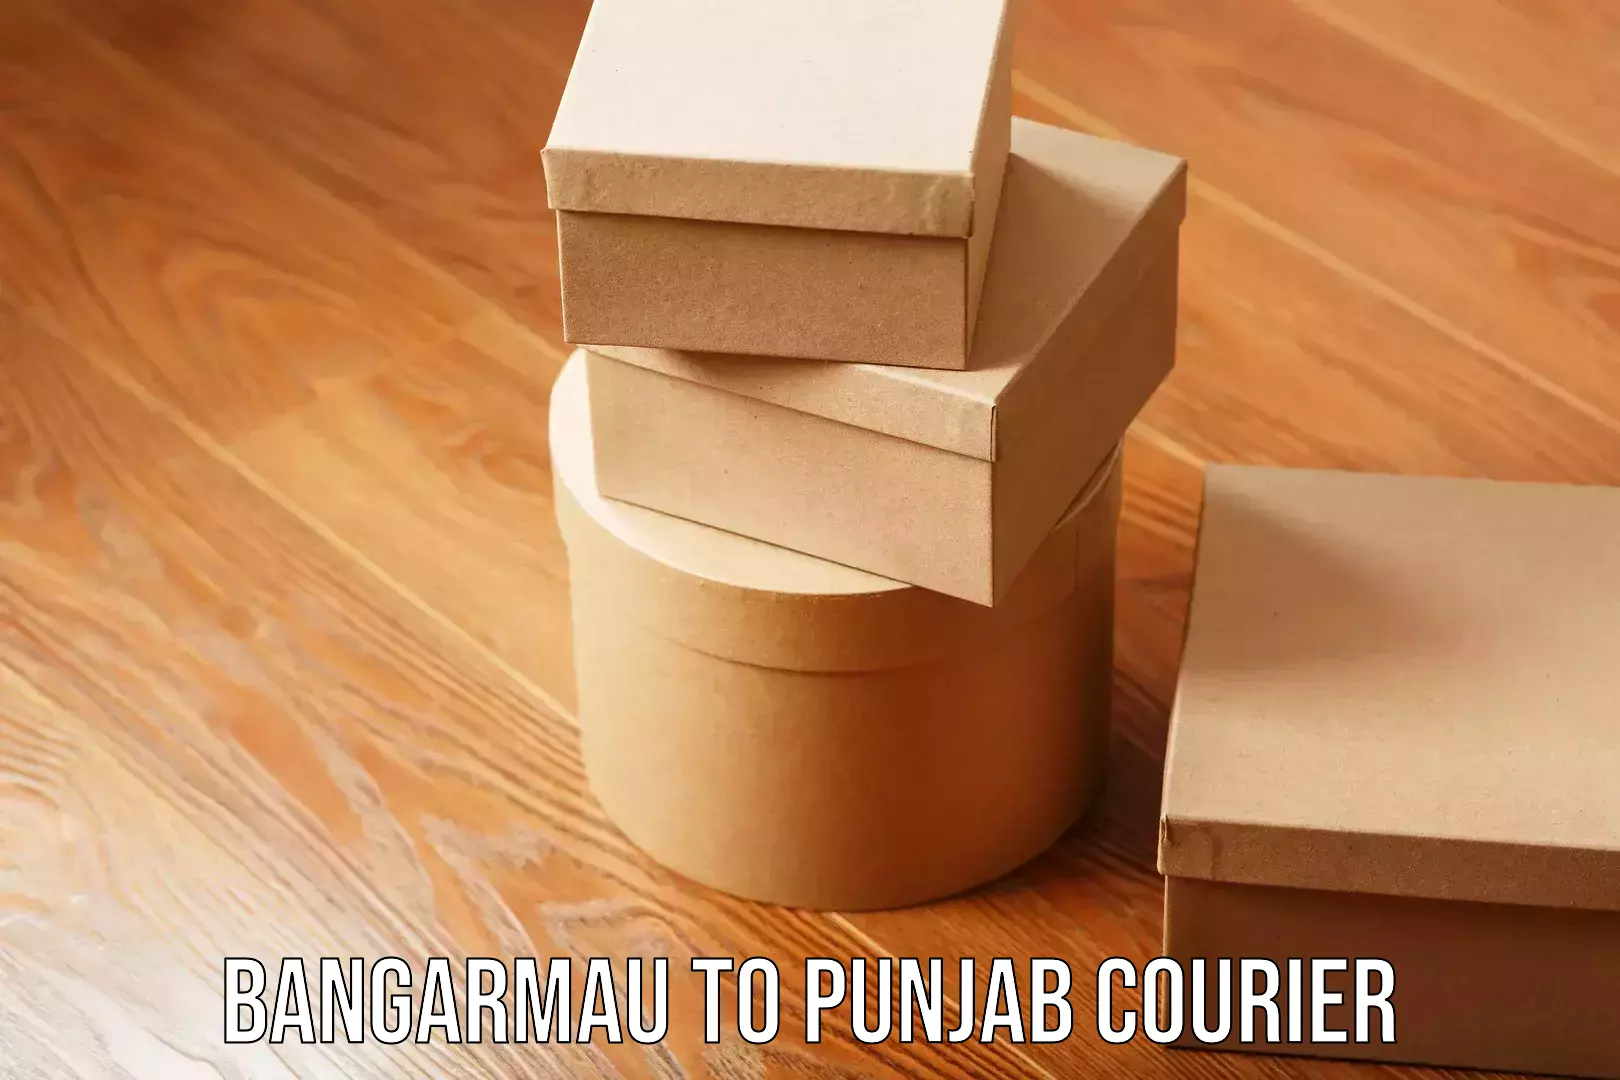 High-performance logistics Bangarmau to Punjab